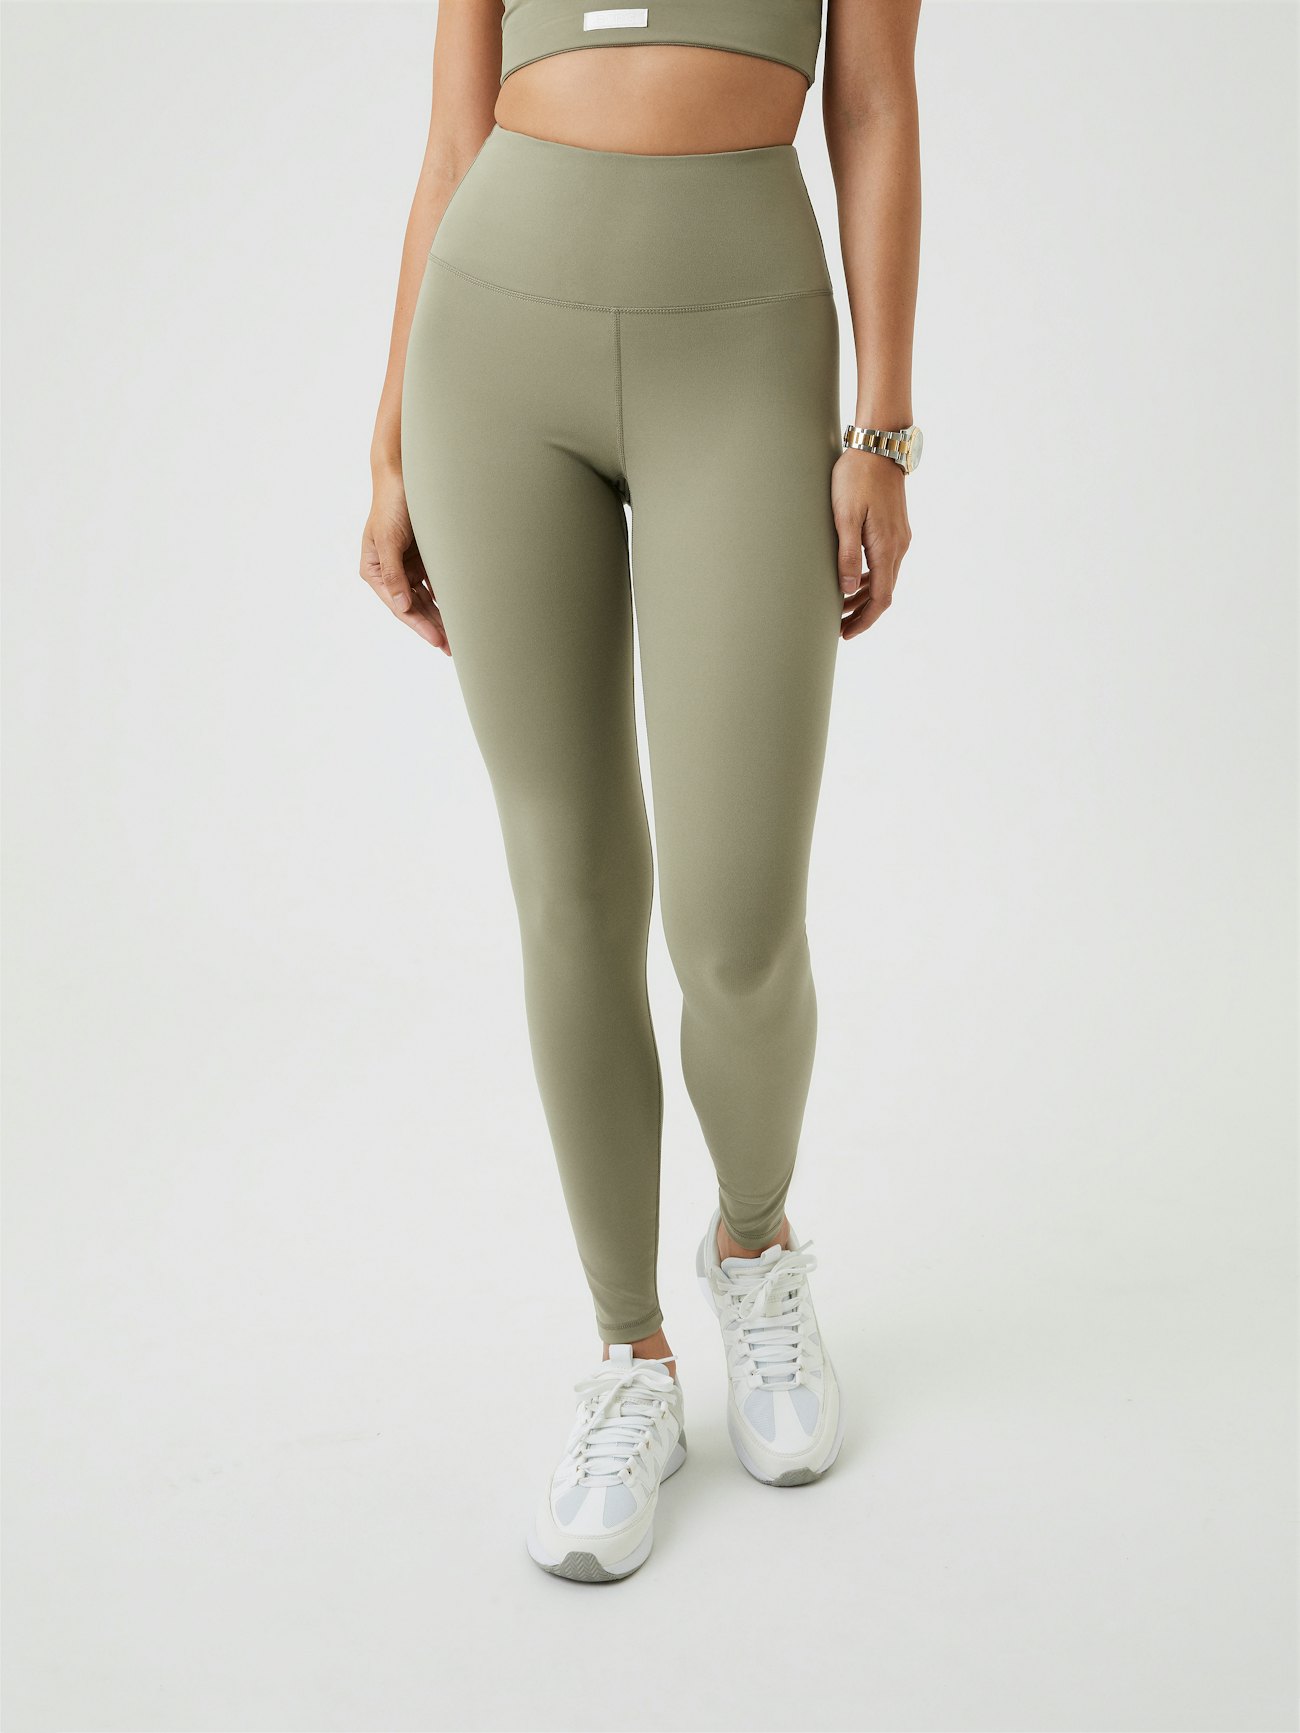 3D Printed High Waist Tiktok Yoga Pants For Women Elastic Fitness